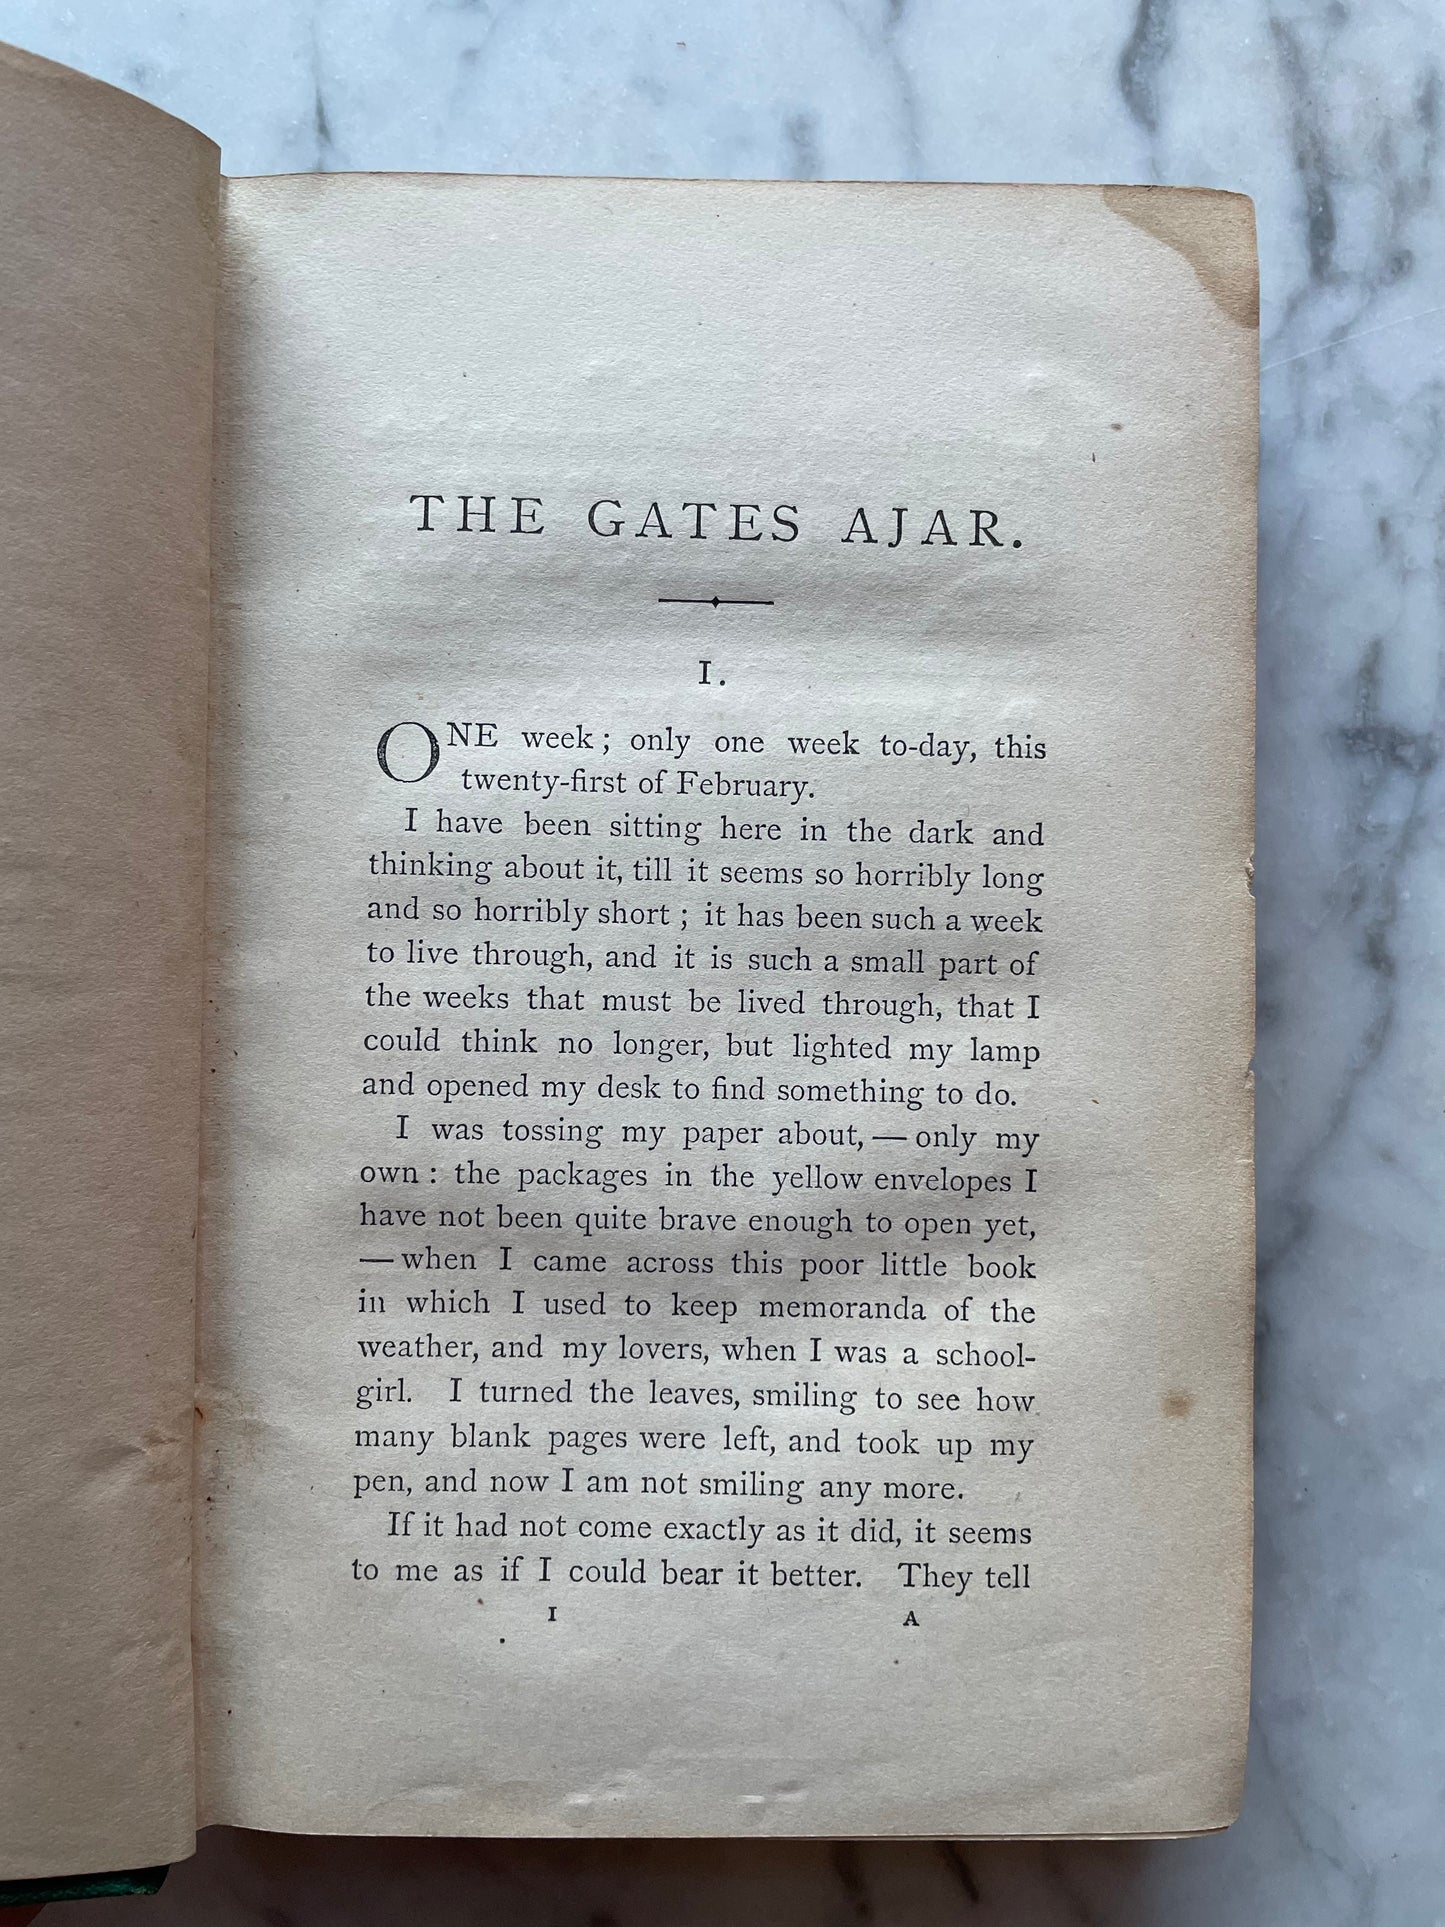 The Gates Ajar - Victorian “Spiritualist Novel”